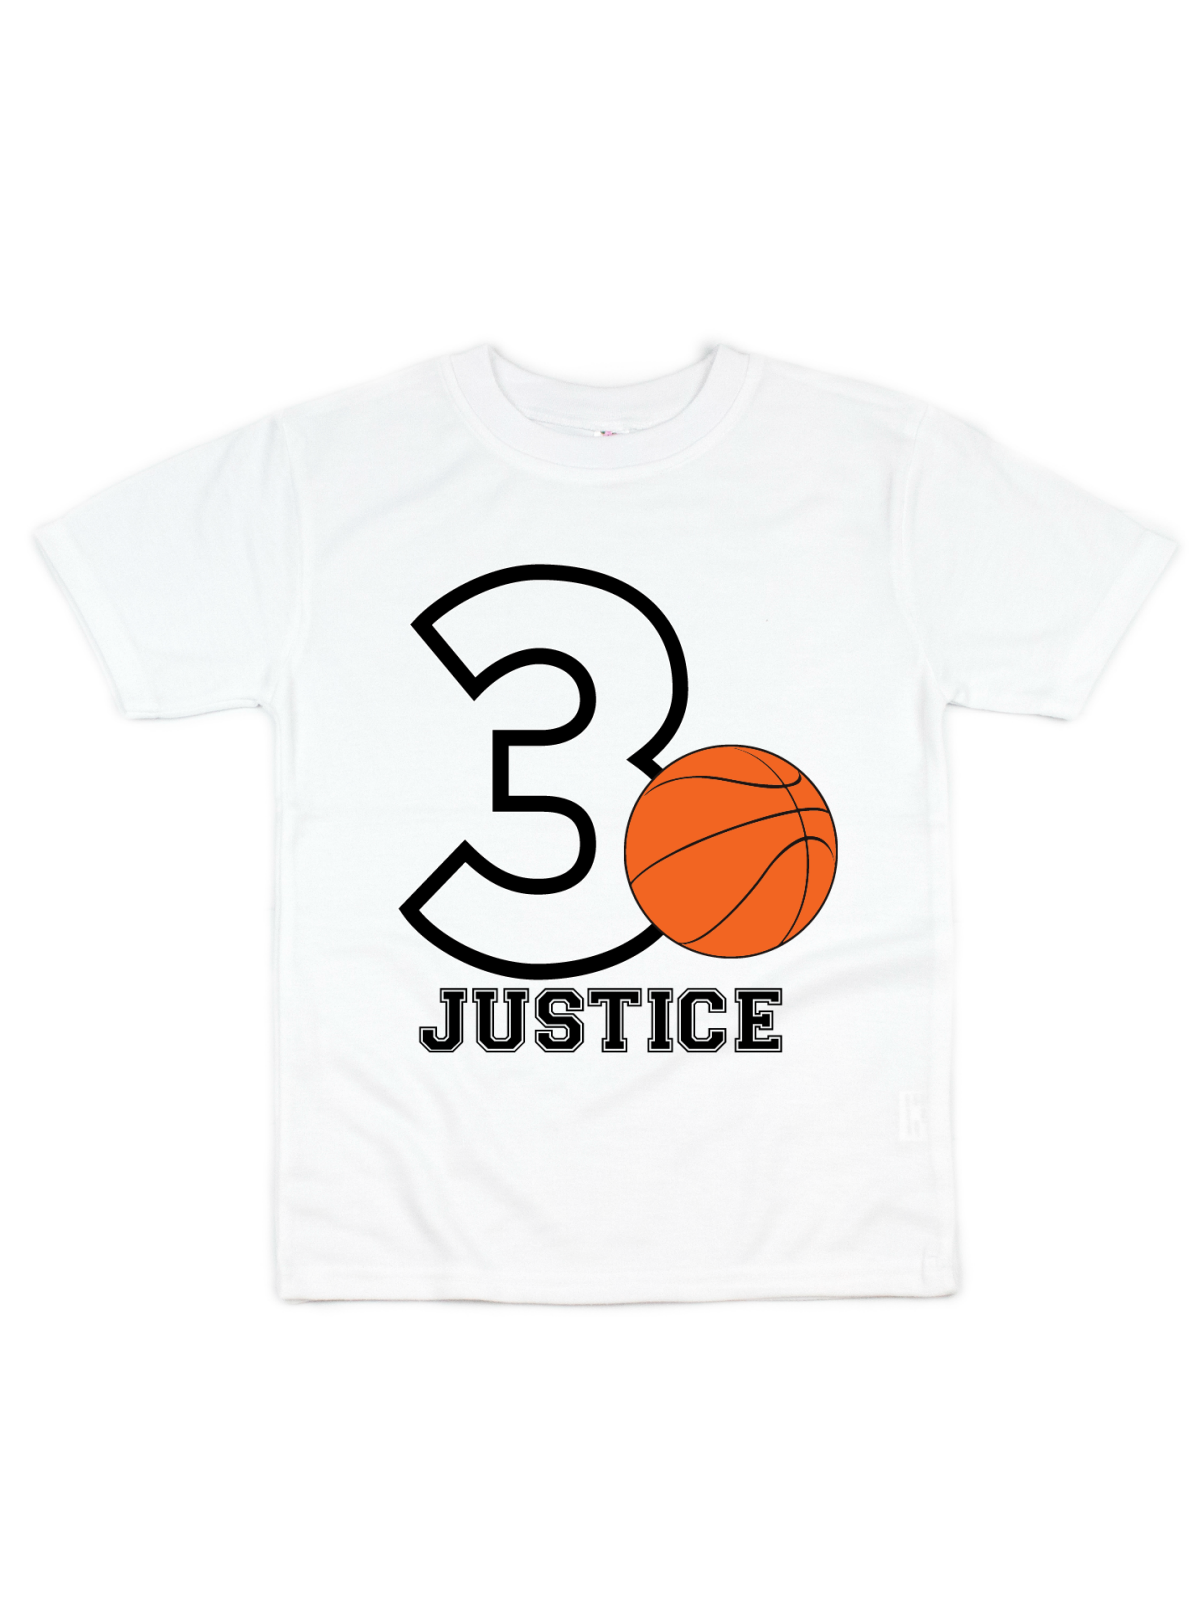 boys basketball shirt designs